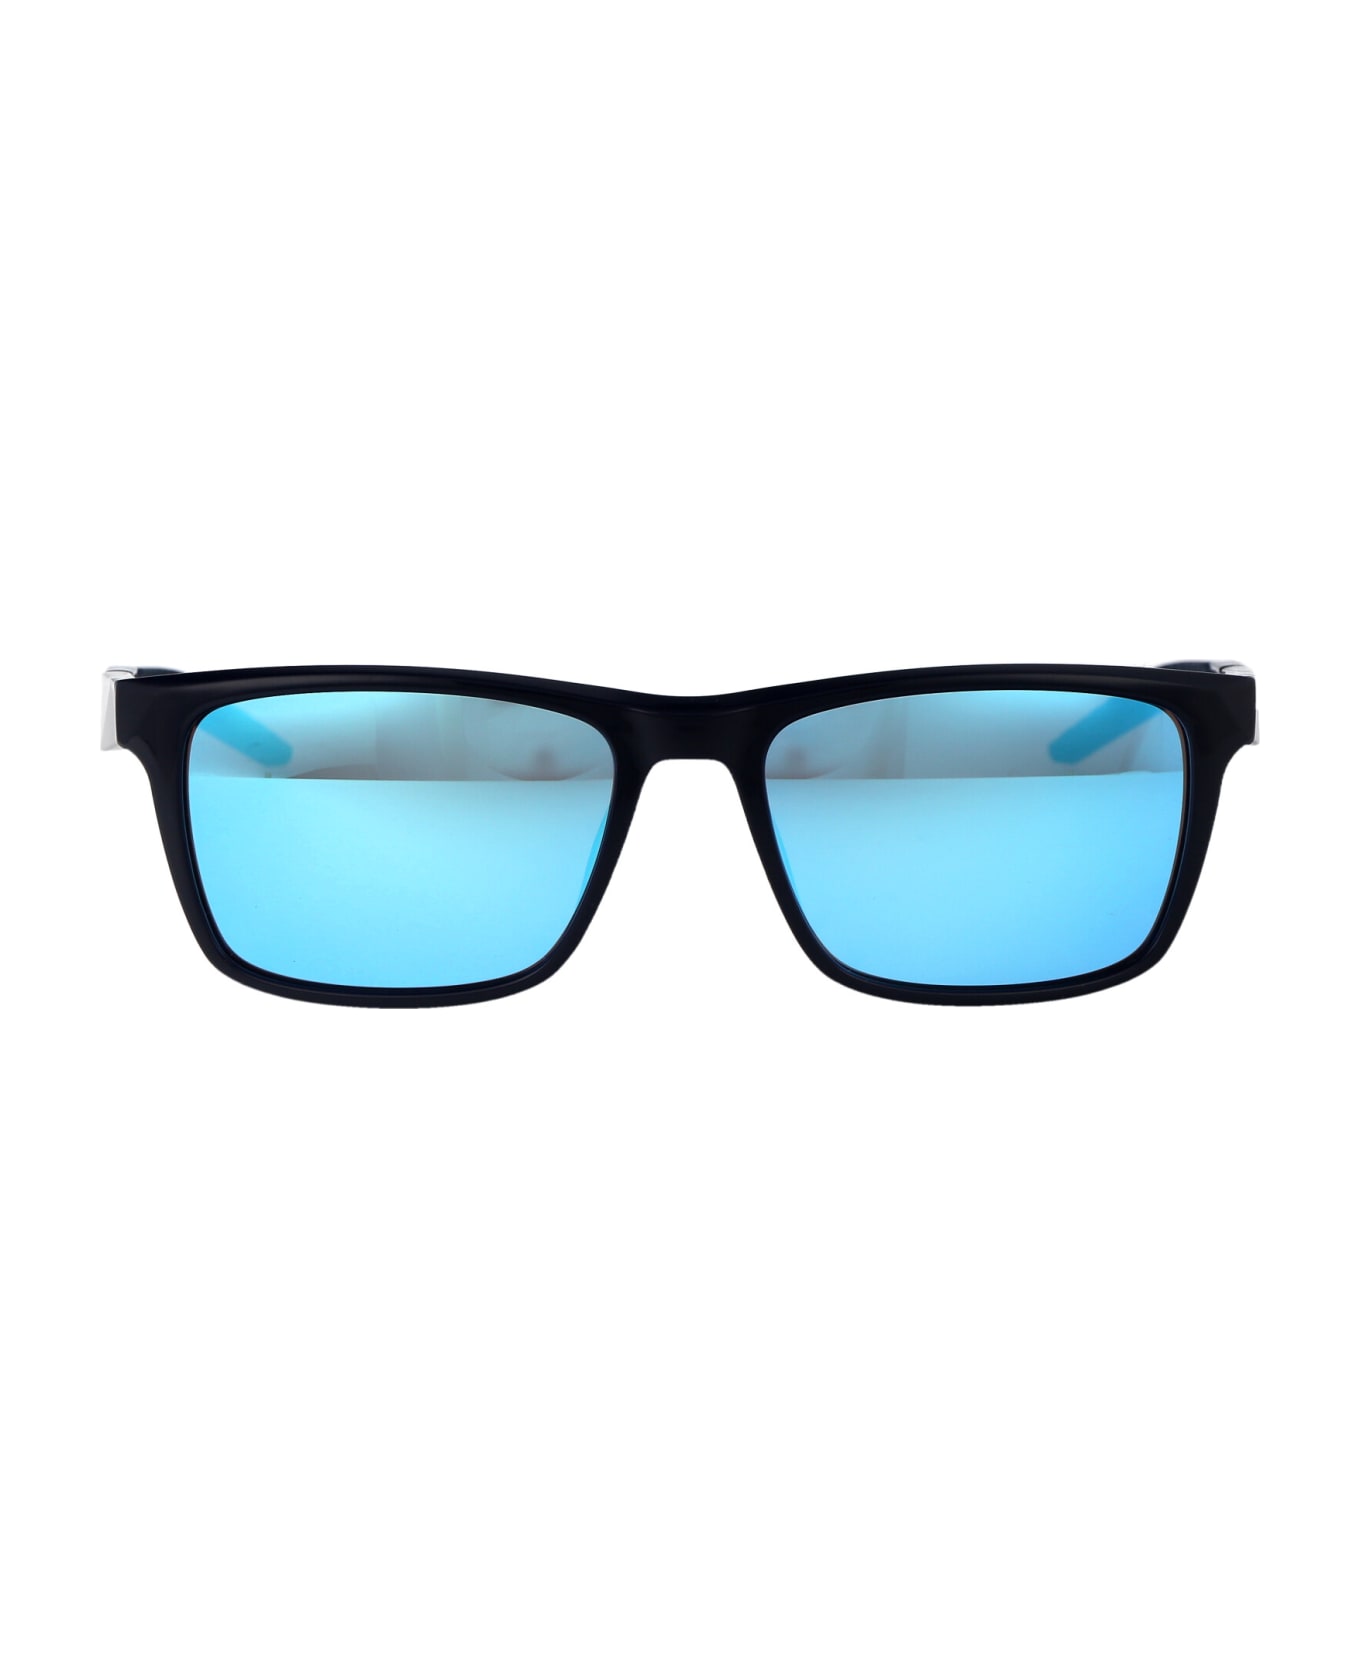 Nike Radeon 1 M Sunglasses - 410 BLUE MIRROR NAVY